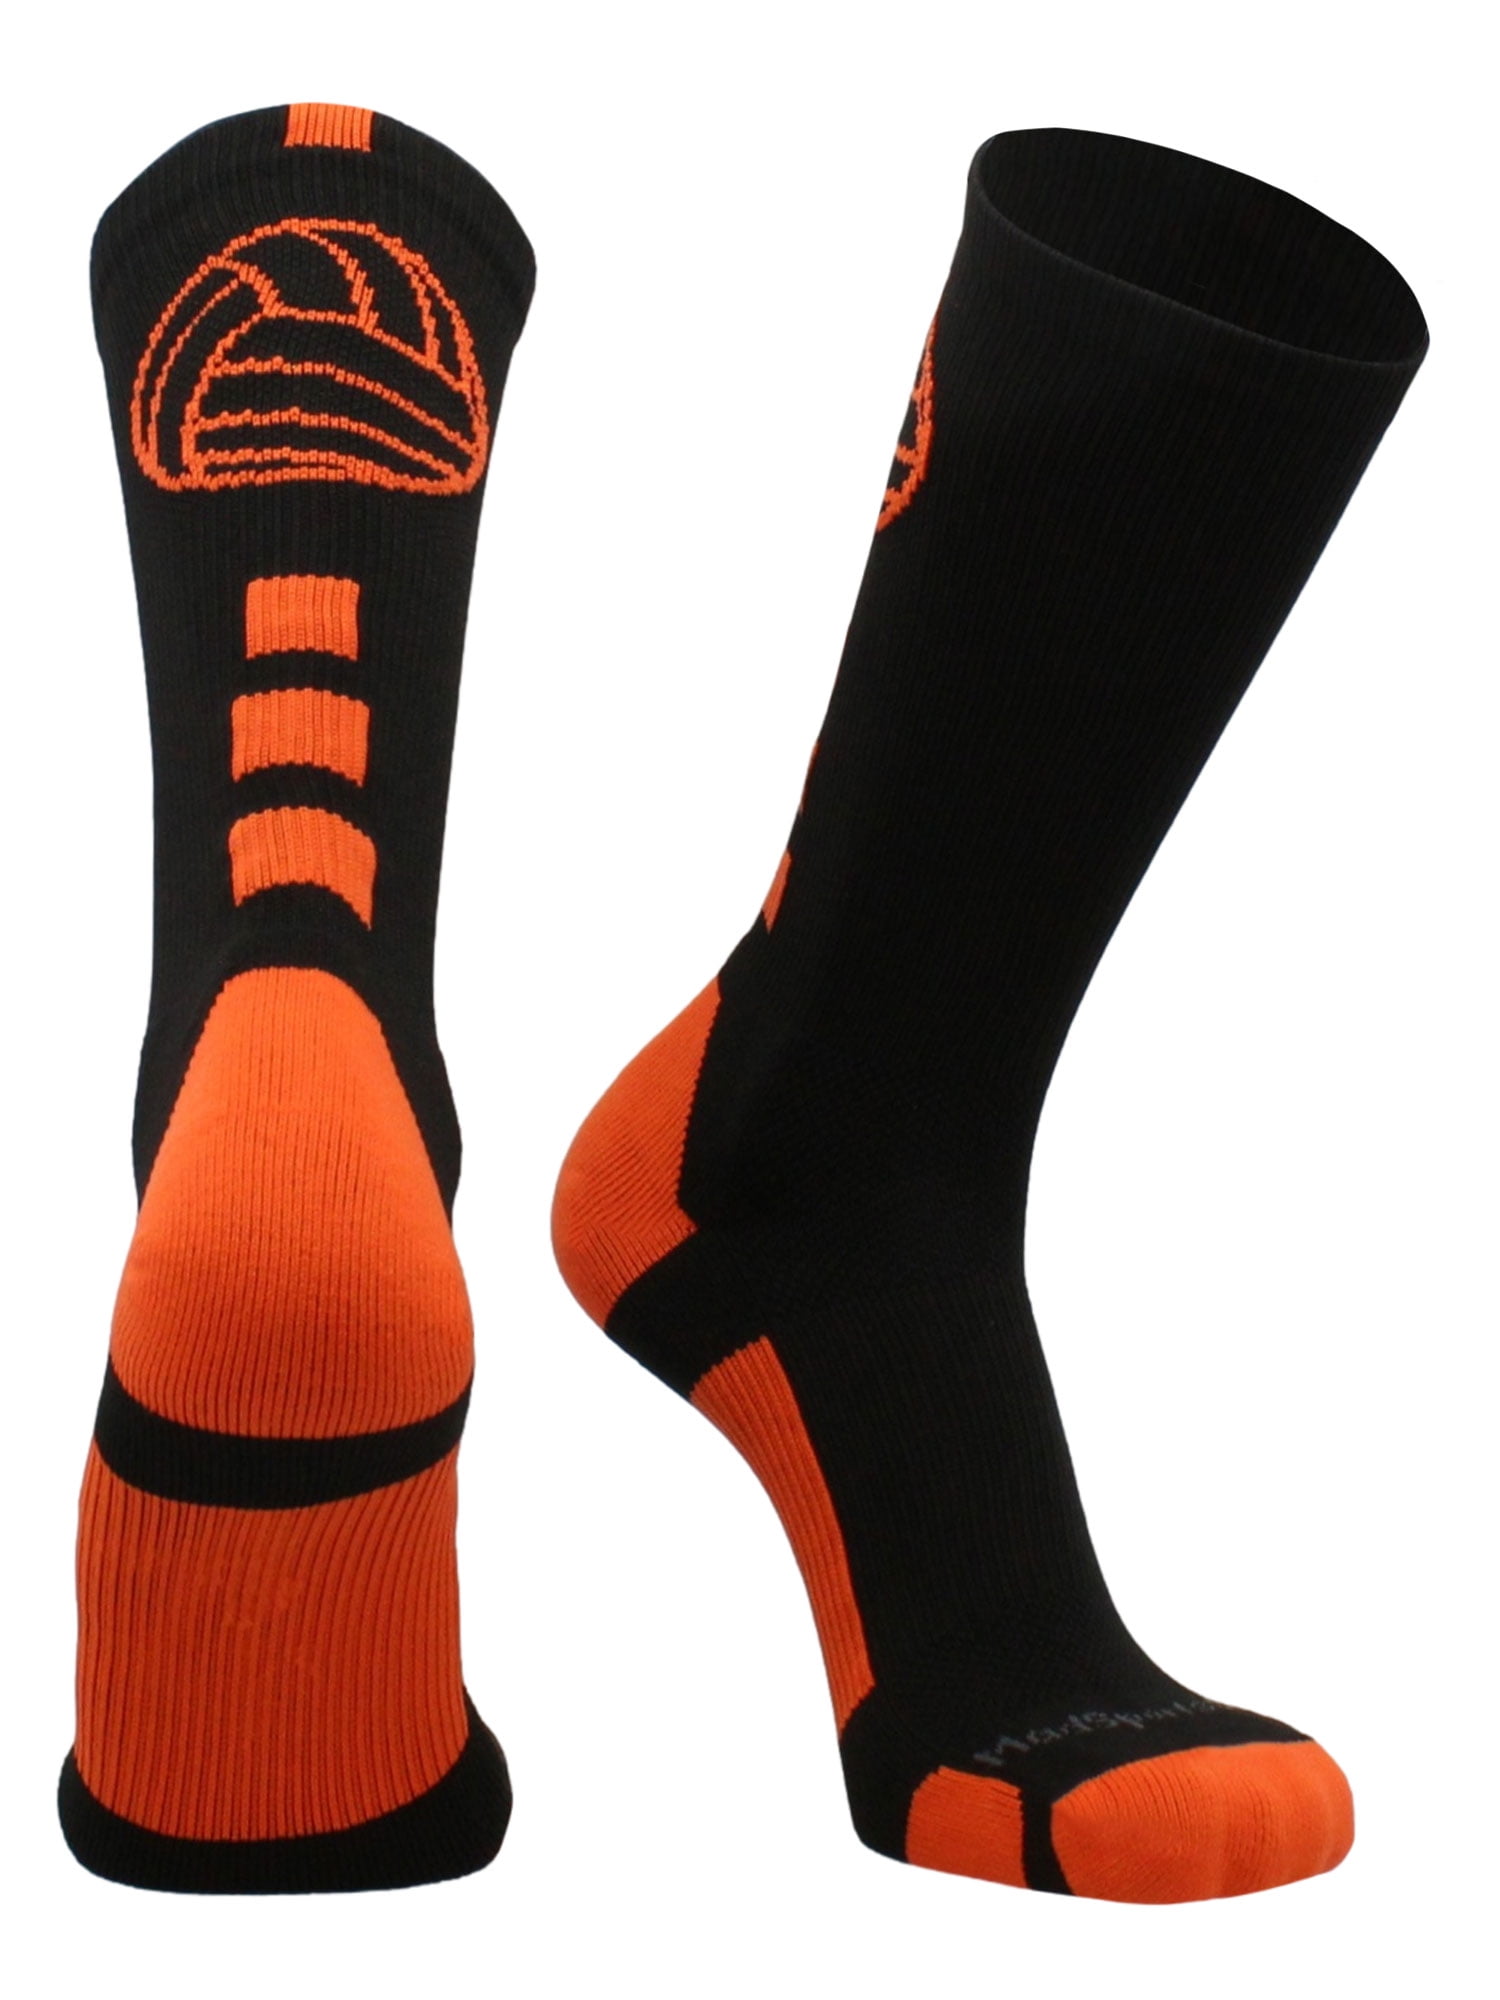 Volleyball Logo Crew Socks (Black/Orange, Medium) - Walmart.com